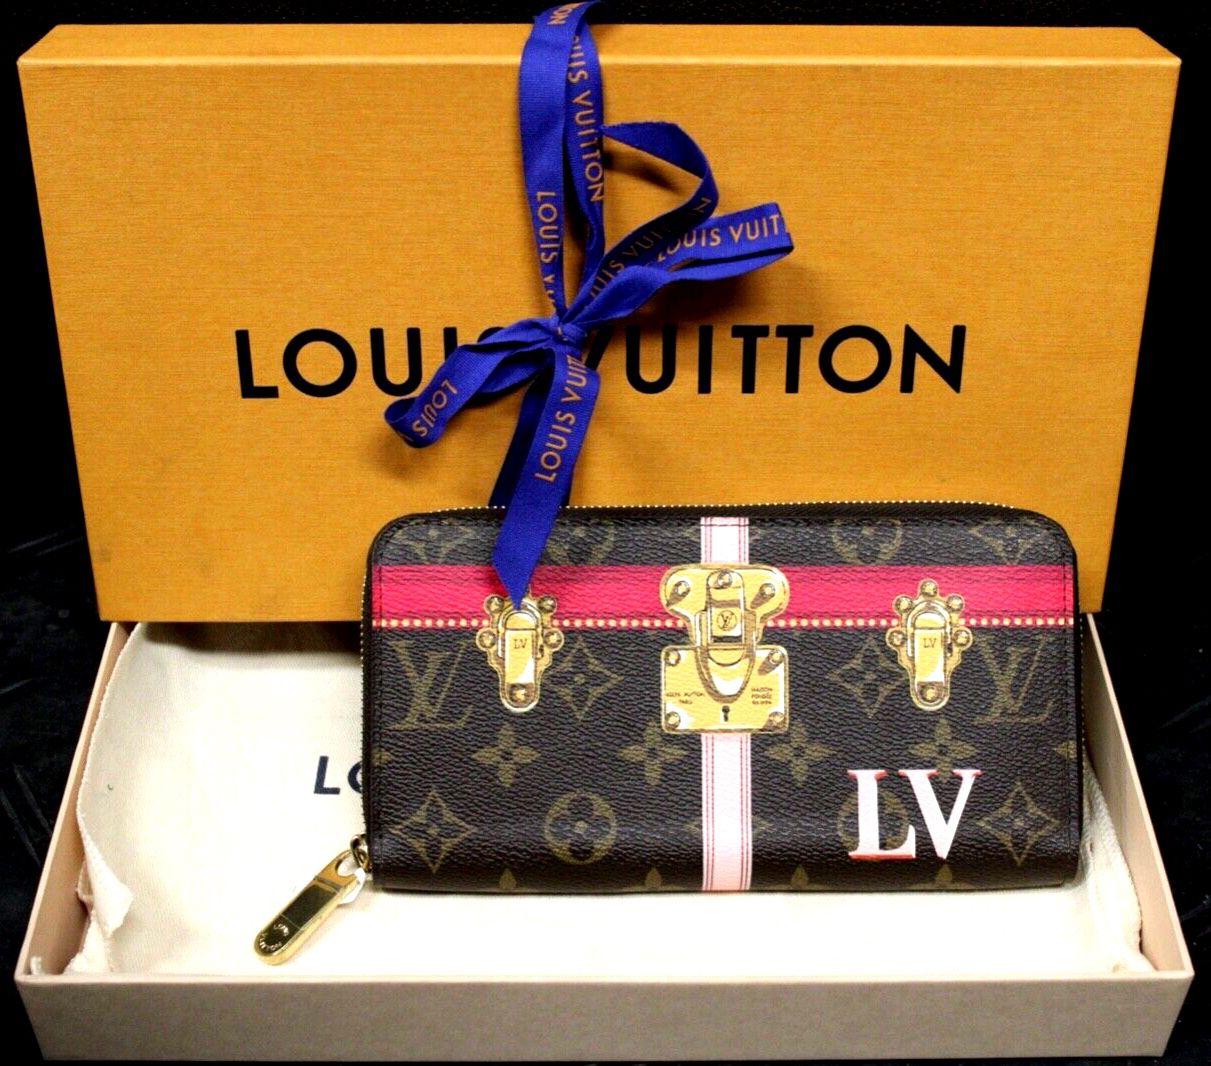 Louis Vuitton Wallet for Sale in Long Beach, CA - OfferUp